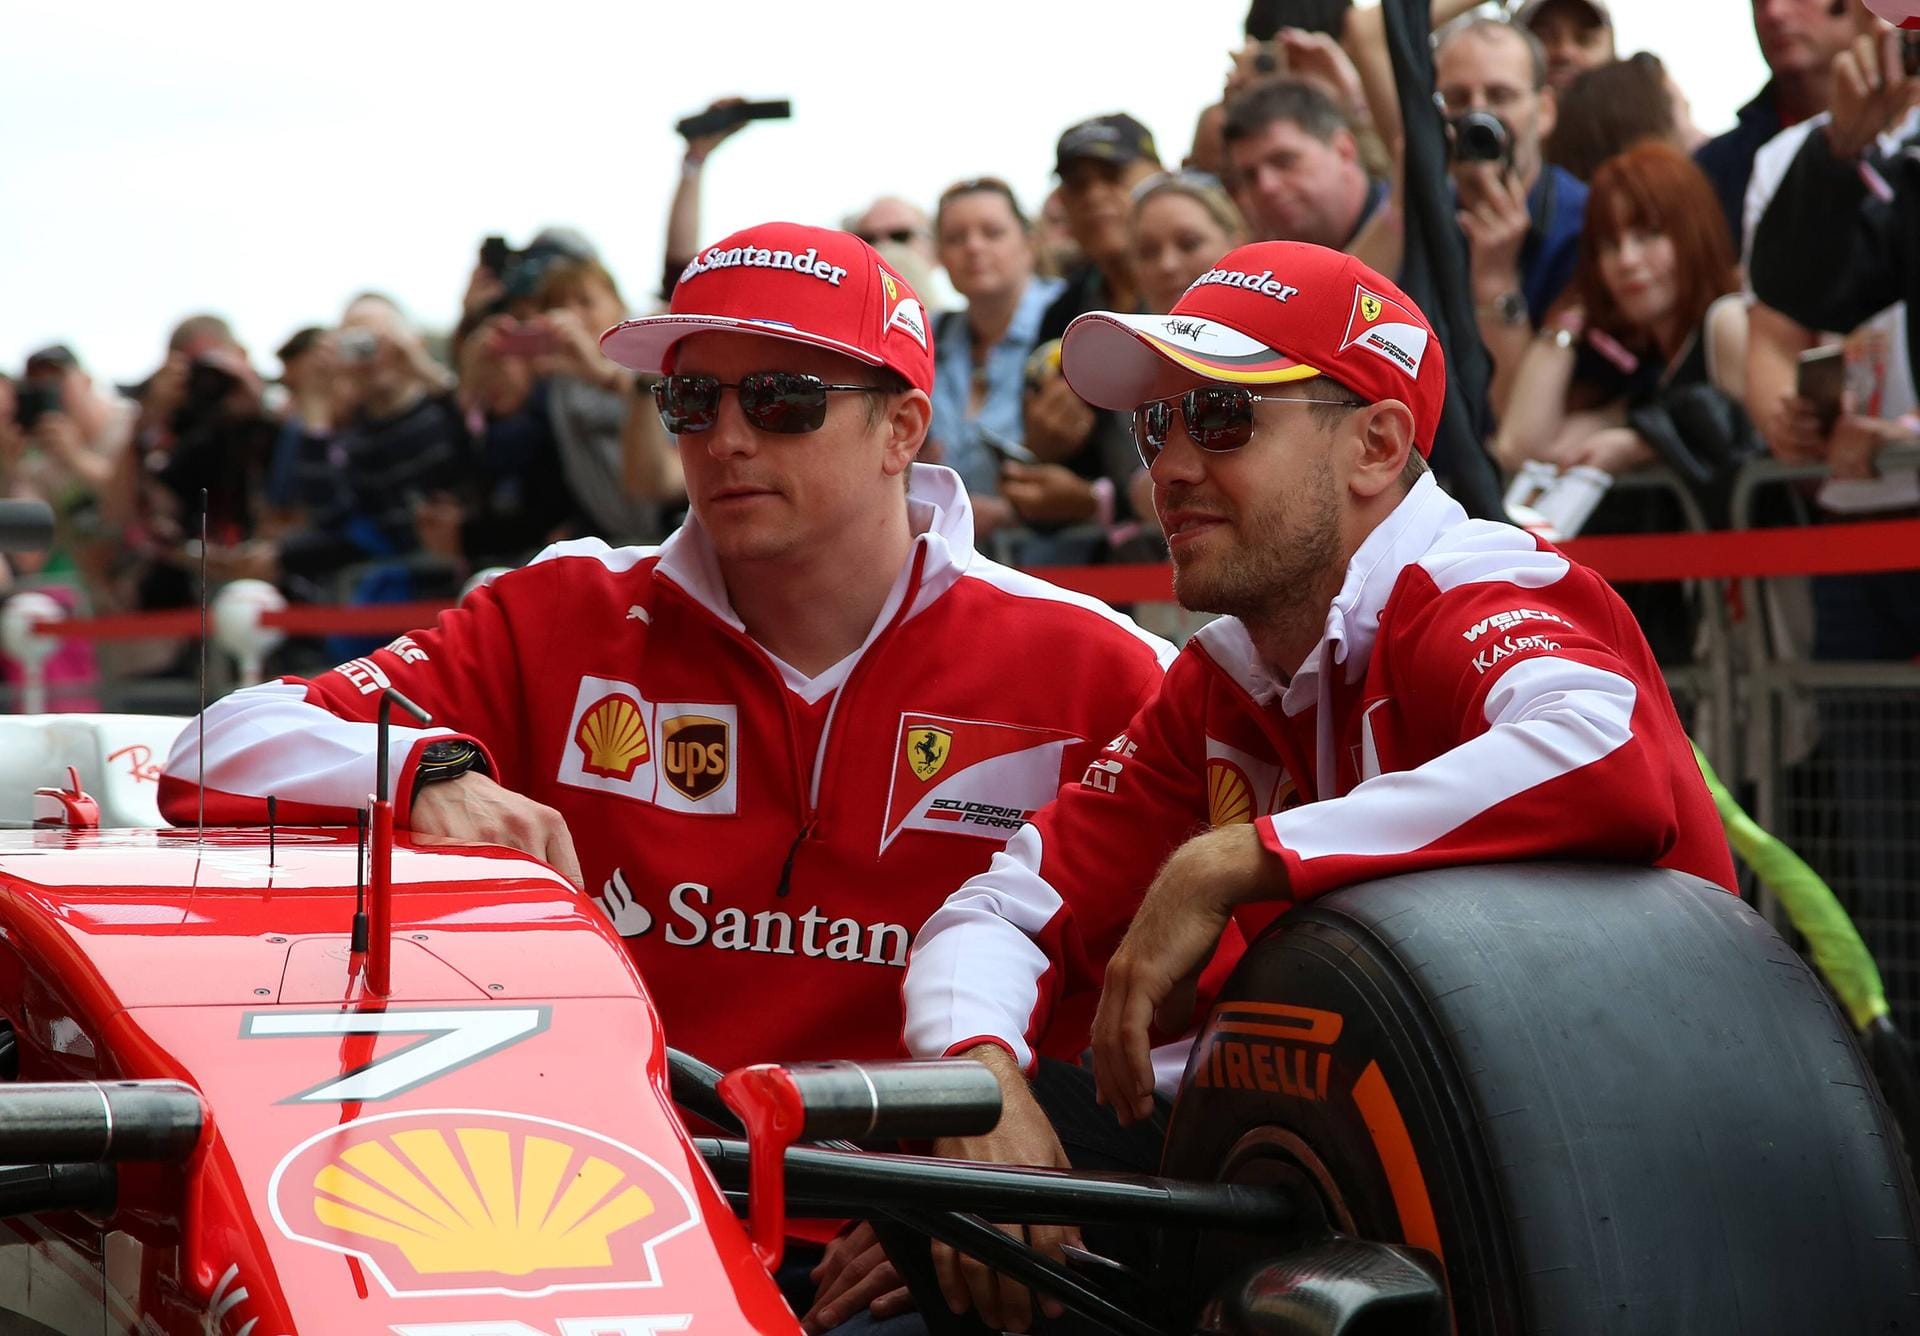 Bis mindestens 2017 bei Ferrari vereint: Die beiden Kumpels Kimi Räikkönen (links) und Sebastian Vettel.